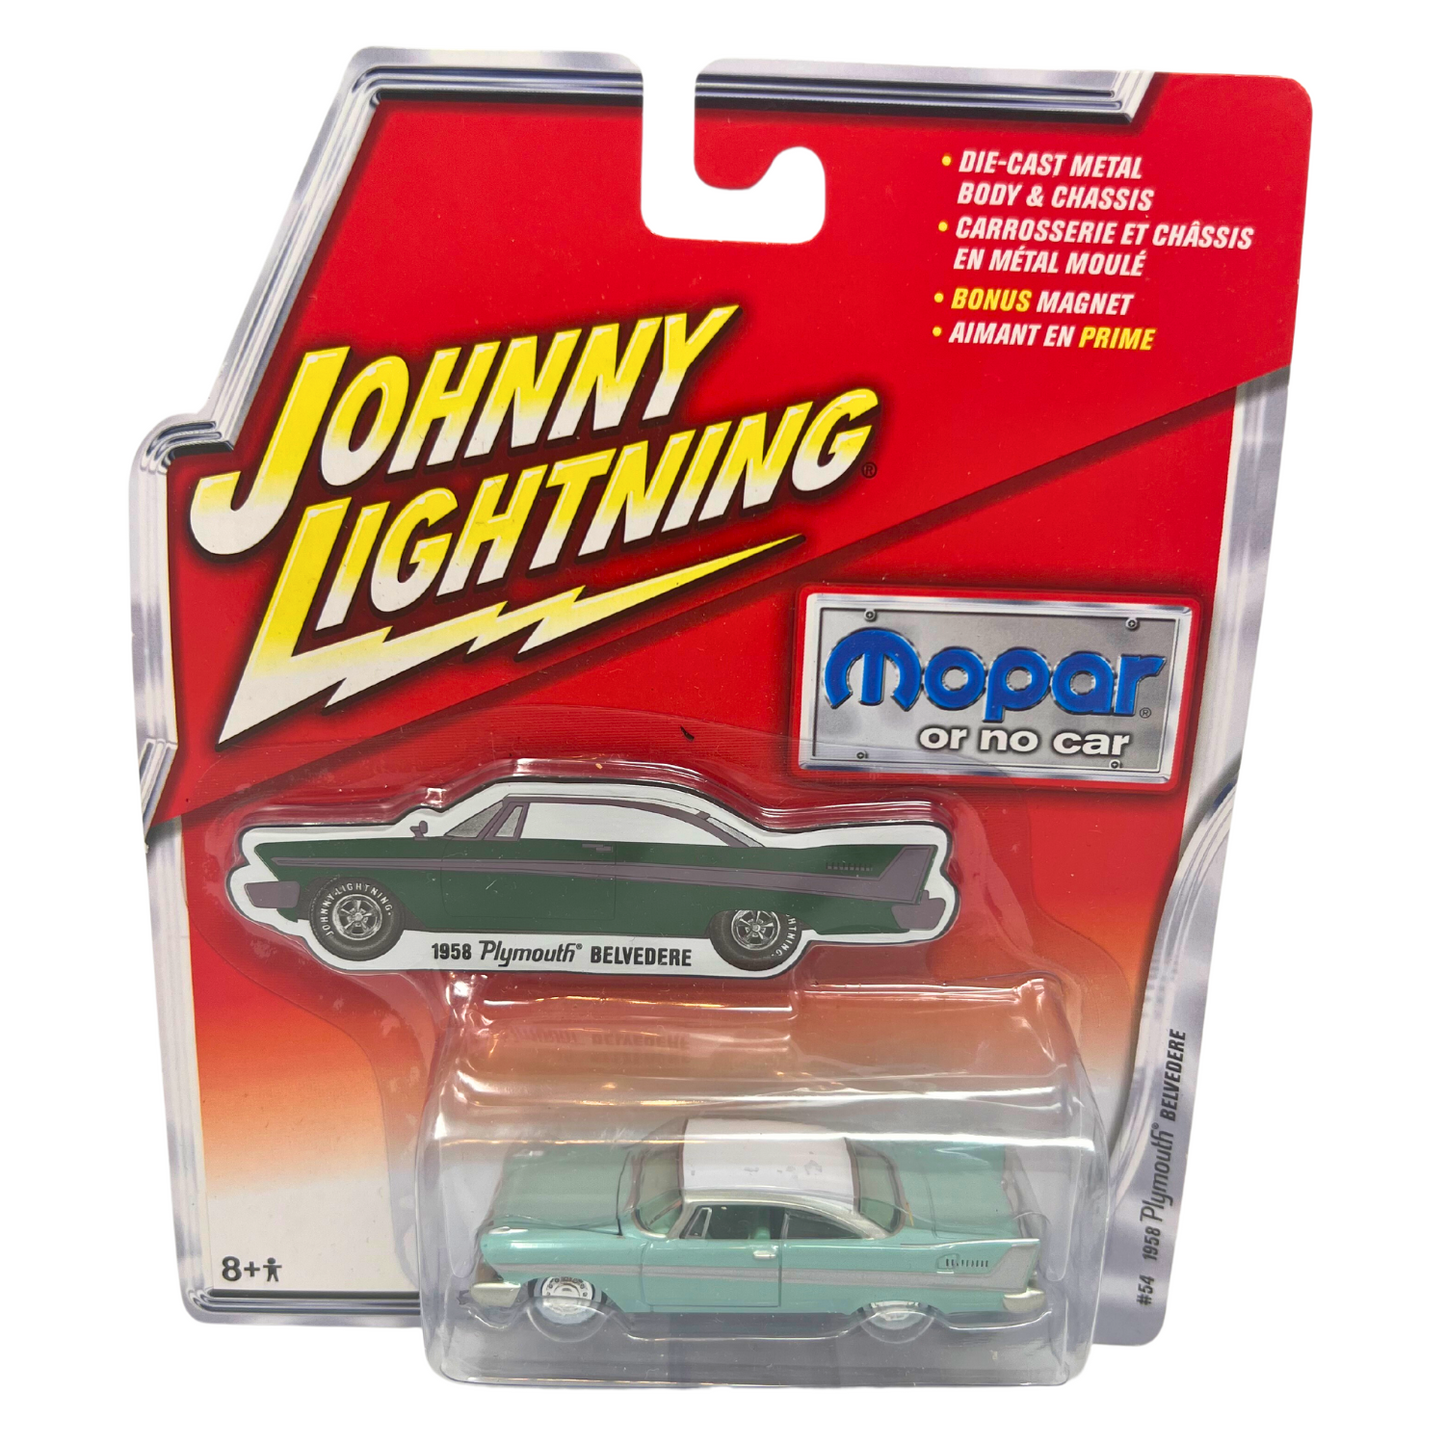 Johnny Lightning Mopar or No Car 1958 Plymouth Belvedere 1:64 Diecast